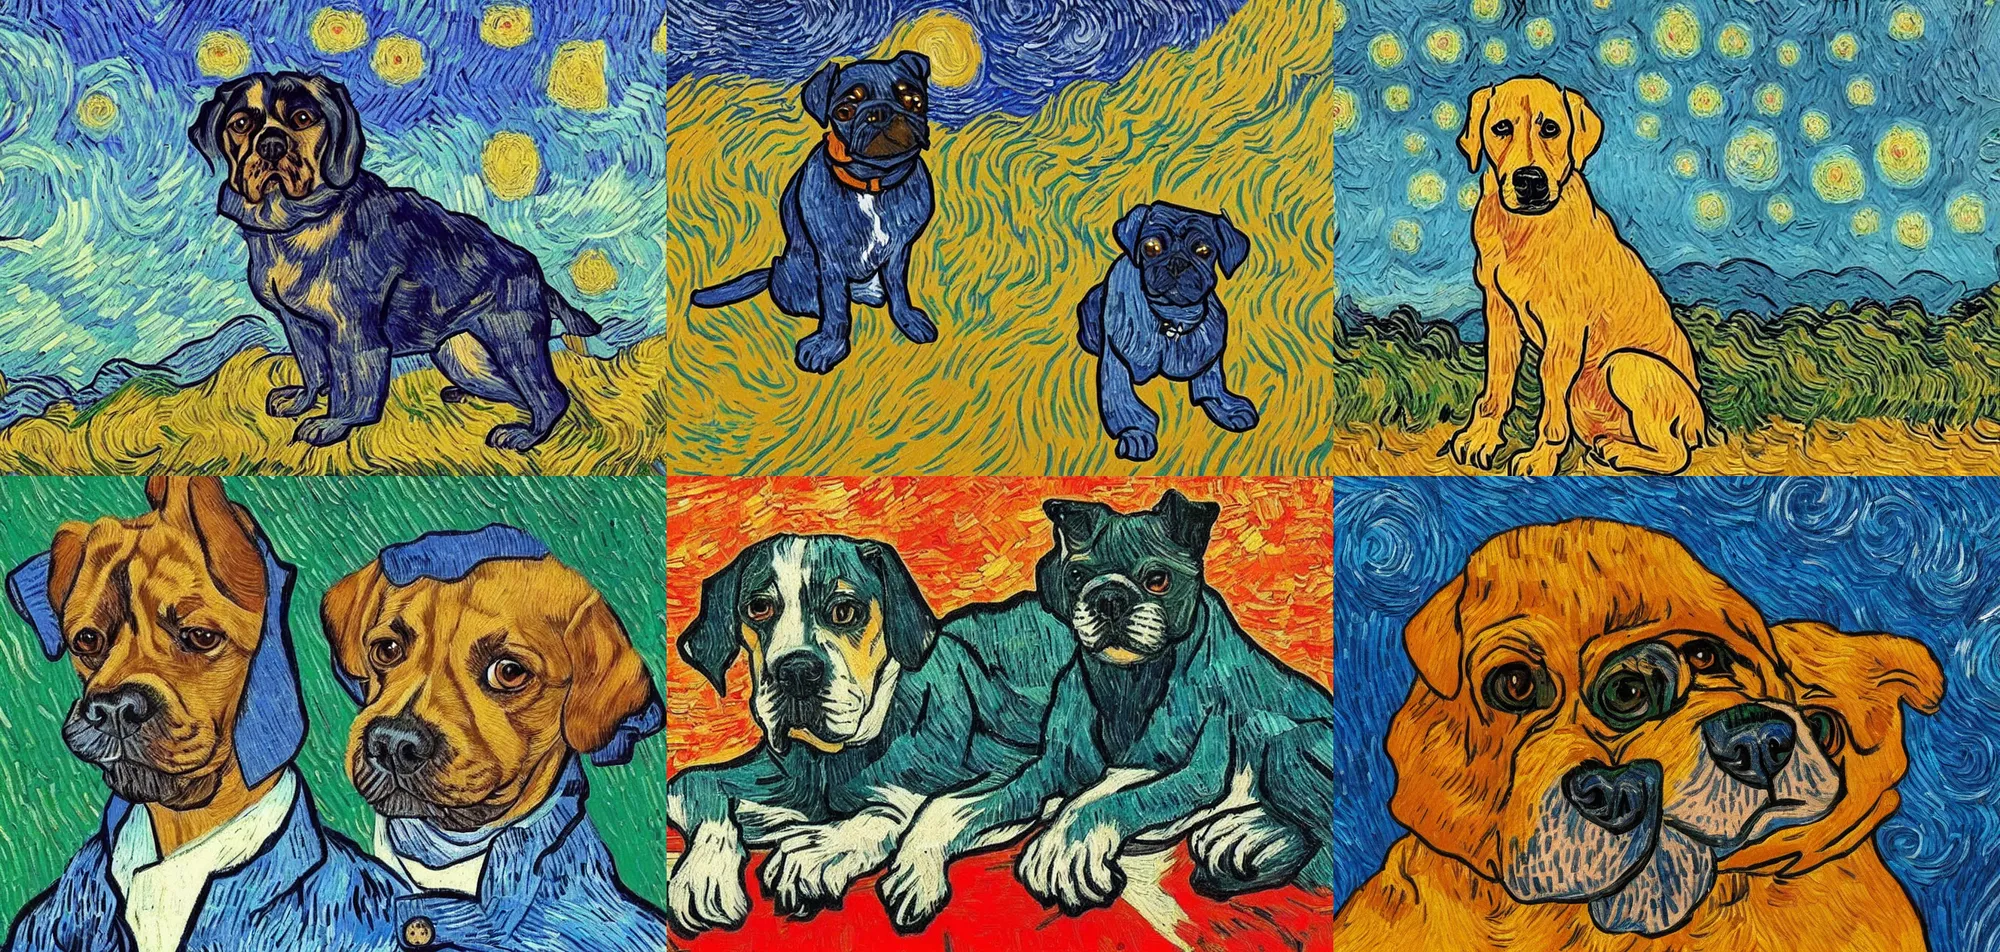 Prompt: Vincent Van Dog in the style of Van Gogh